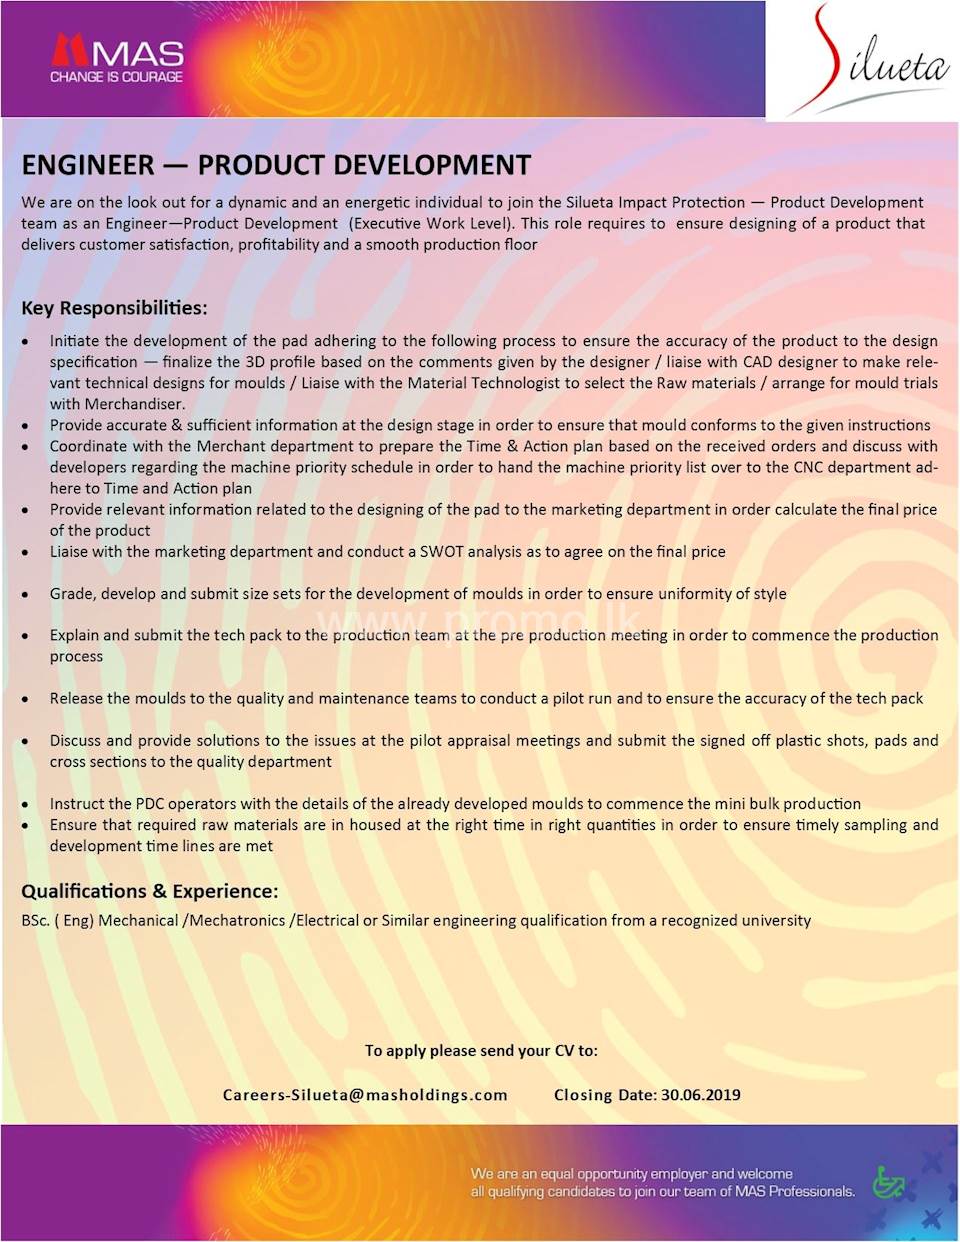 Engineer - Product Development